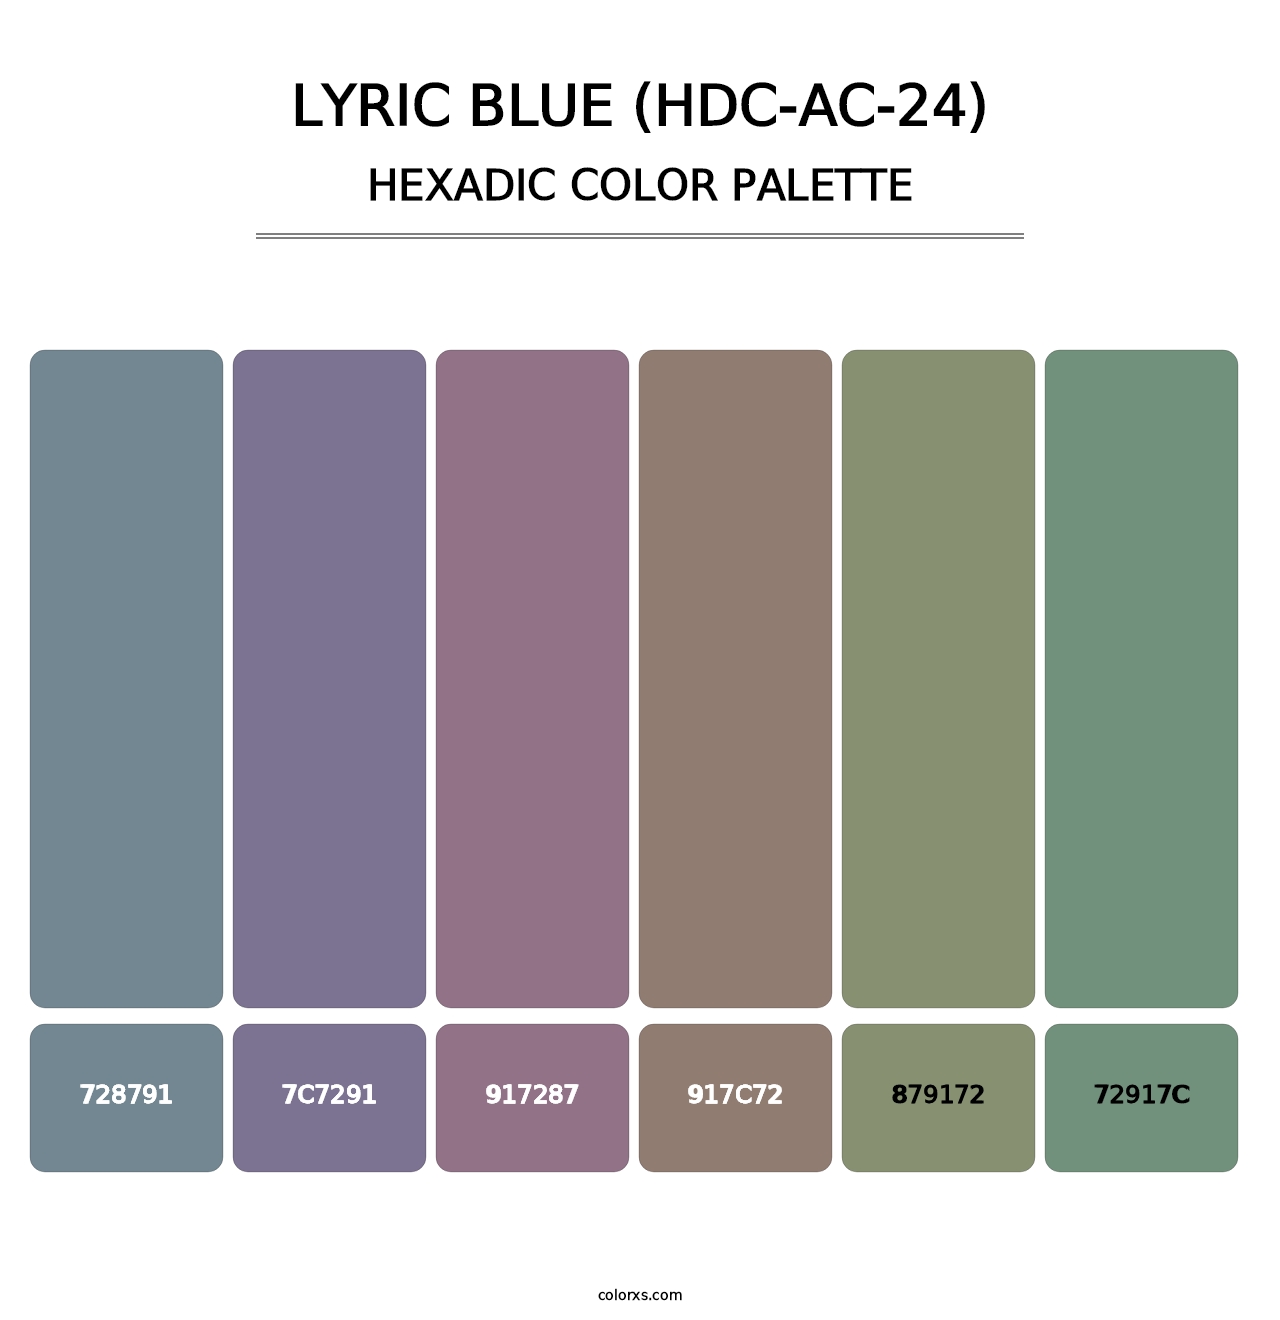 Lyric Blue (HDC-AC-24) - Hexadic Color Palette